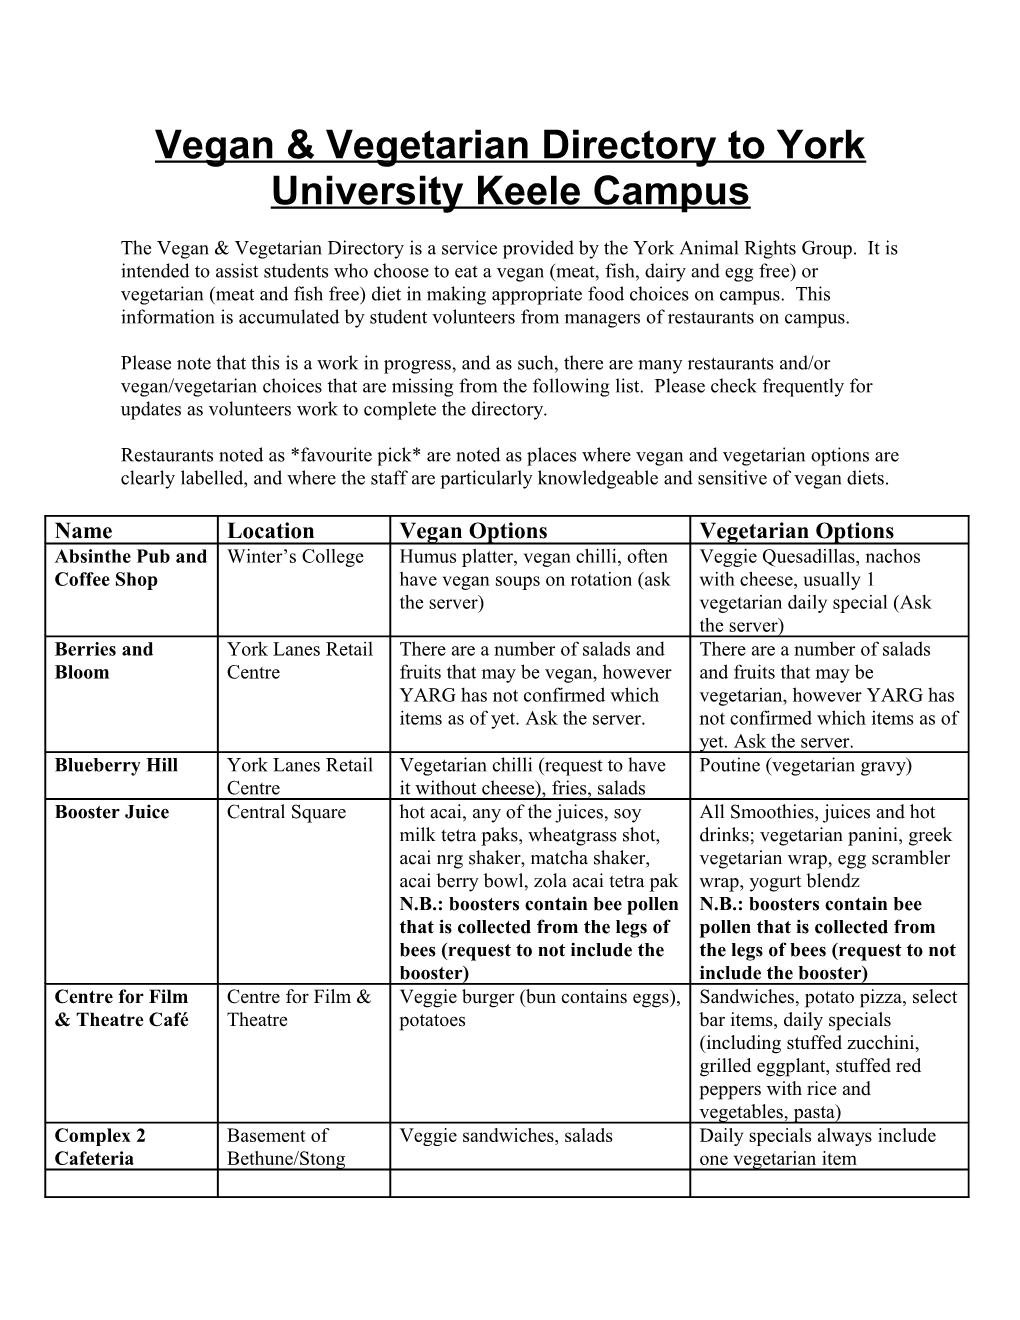 Vegan & Vegetarian Directory to York University Keele Campus